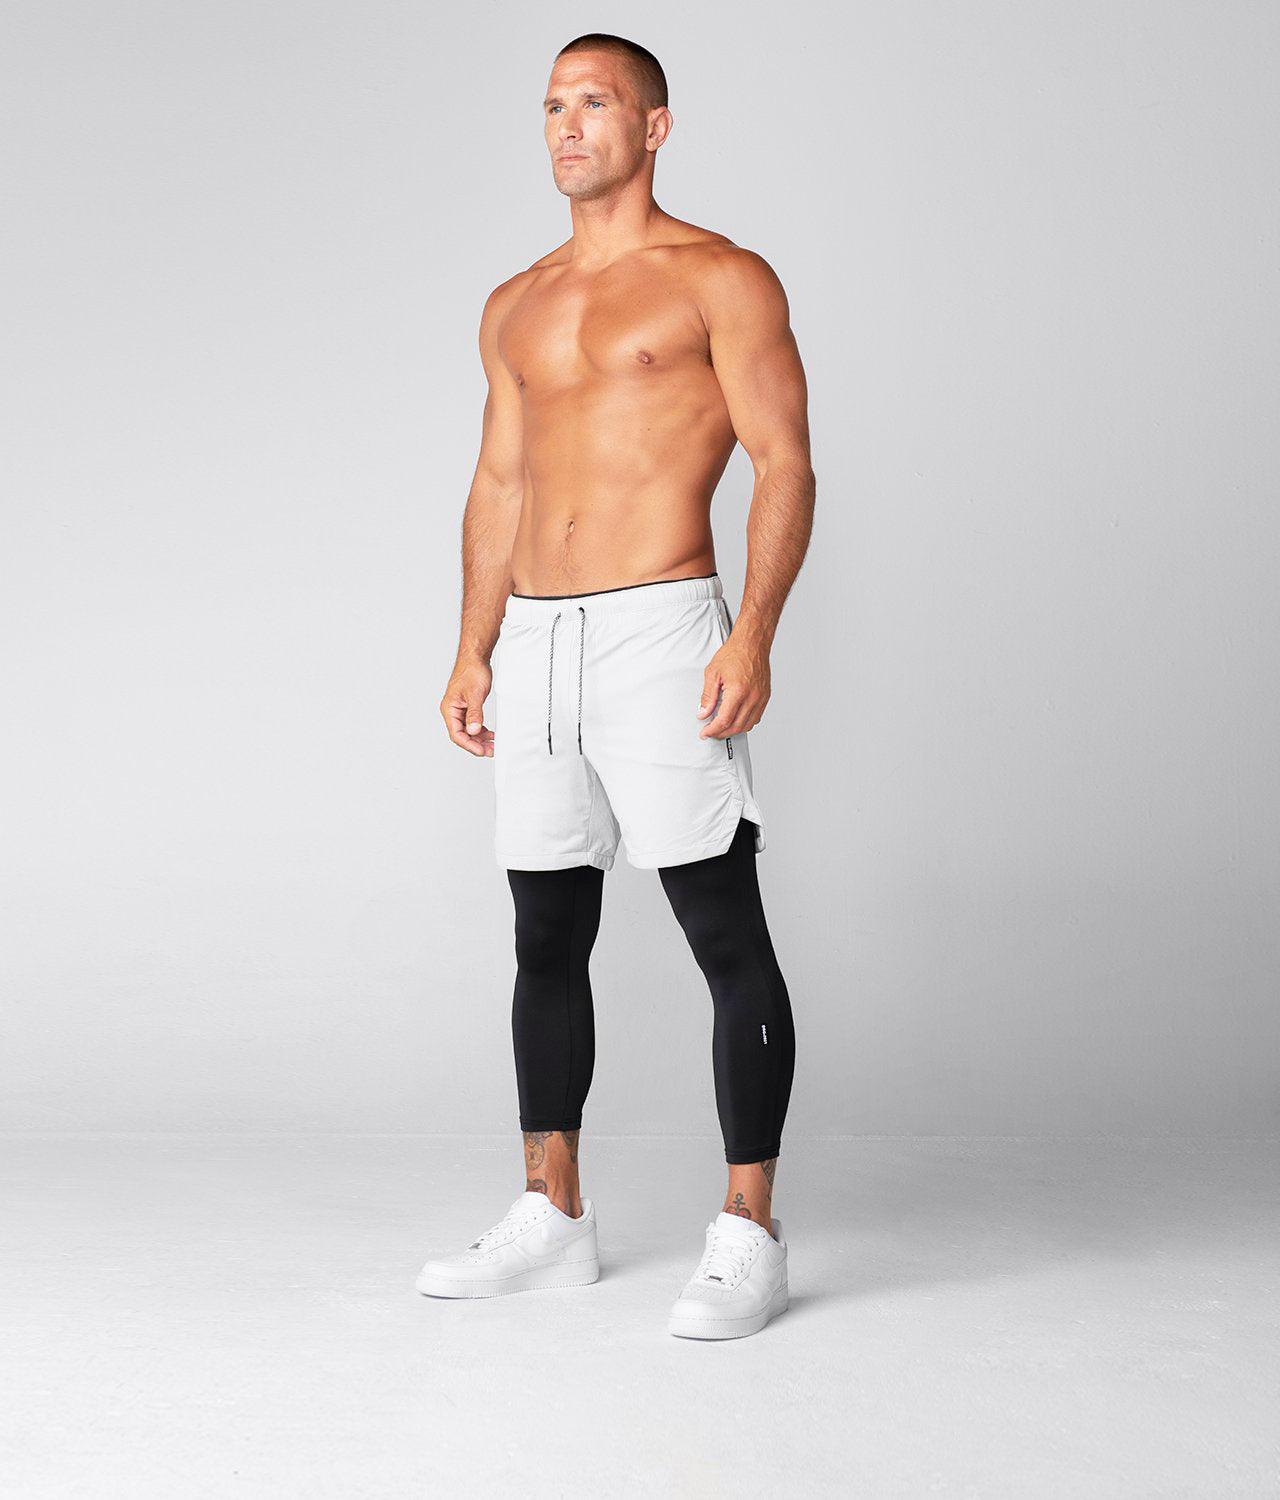 Men's Workout Shorts - Buy Gym Shorts Men's Online - IRONGEAR